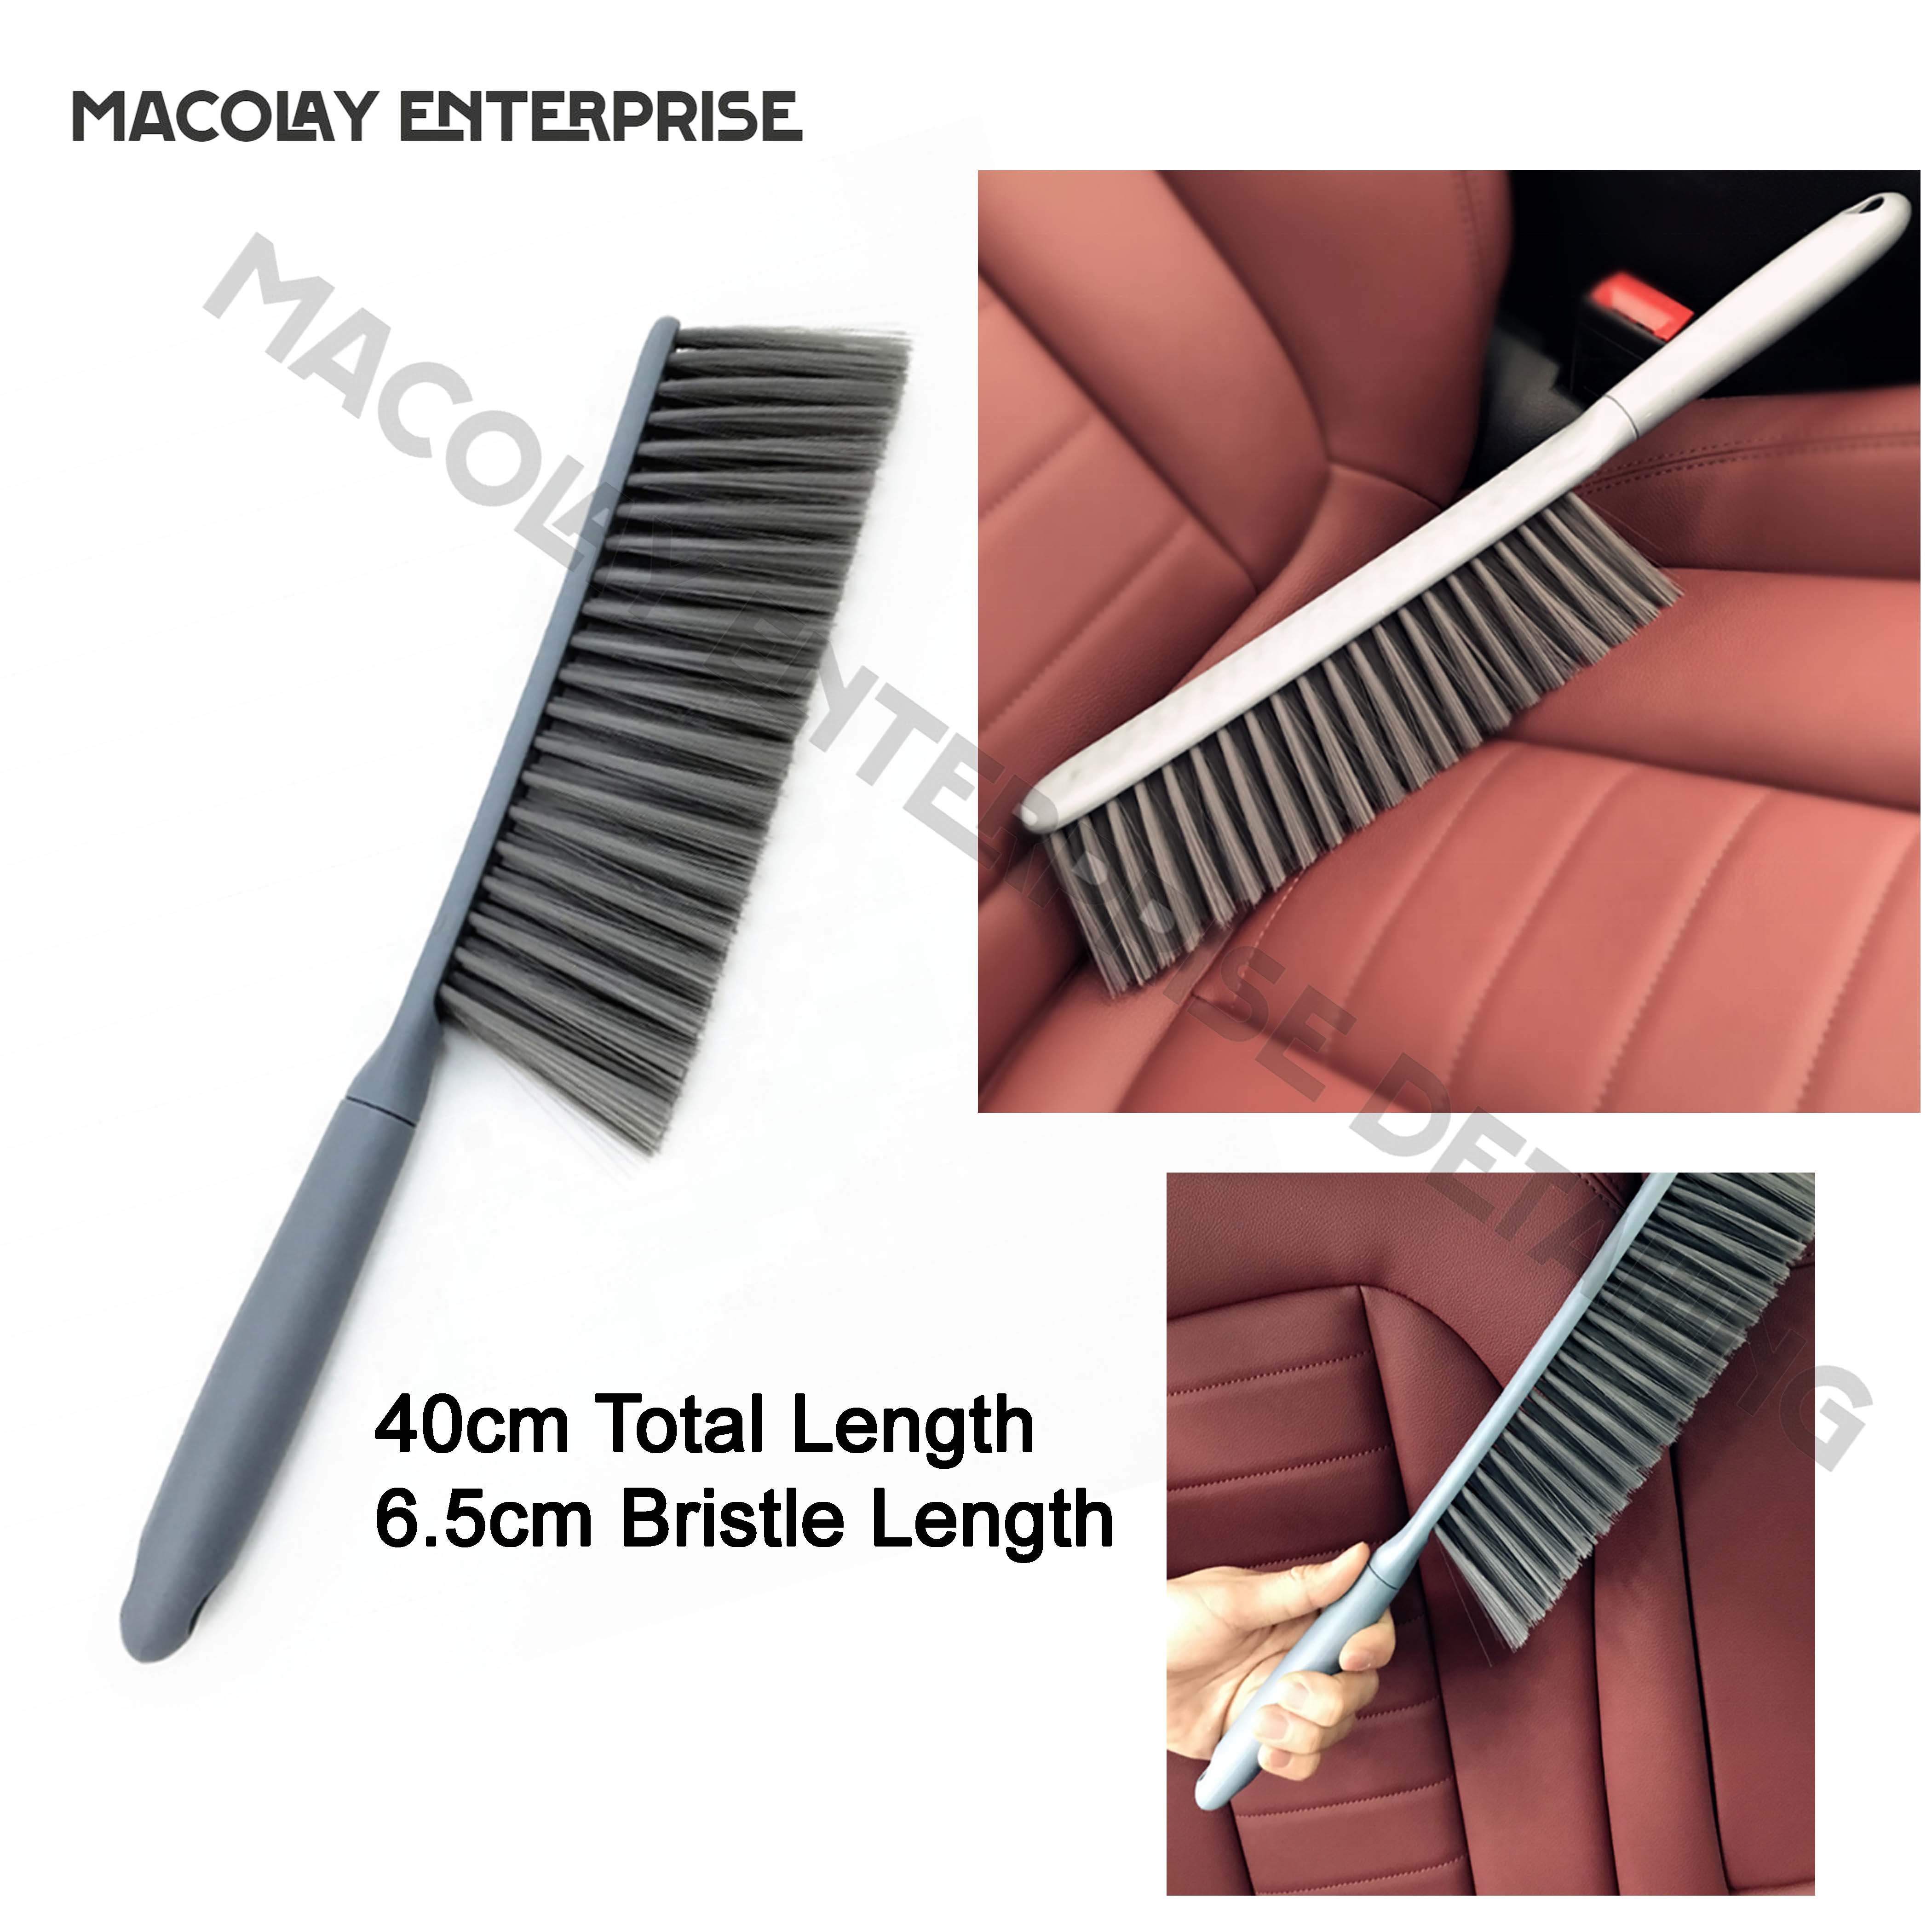 Macolay Enterprise Auto Detailing Supplies